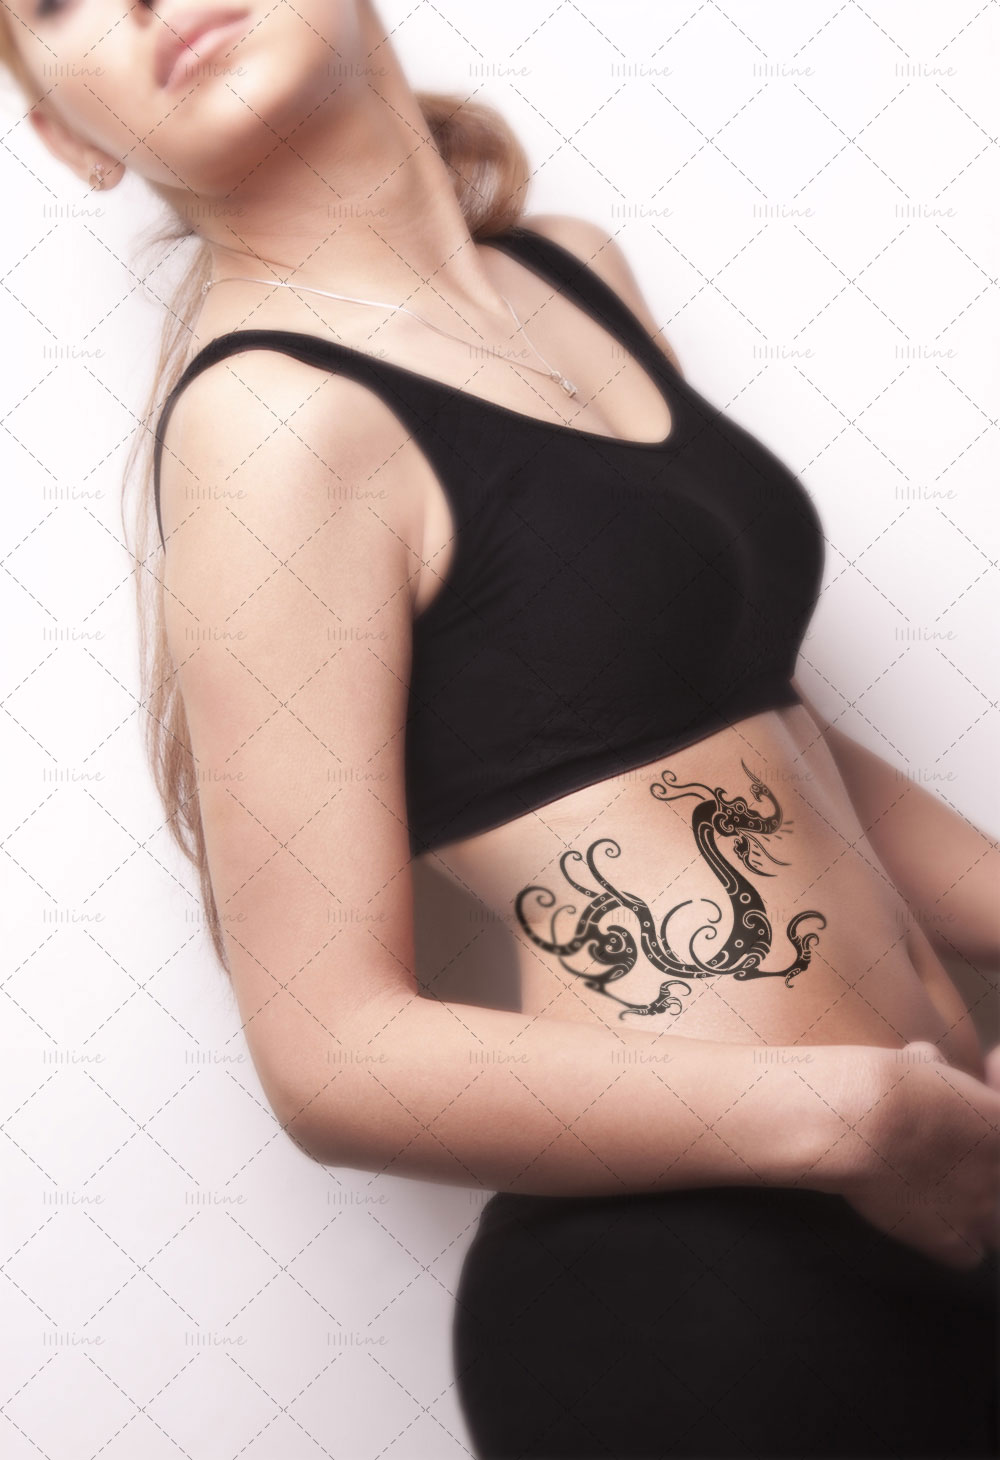 Drachen totem tattoo pattern vi eps pdf